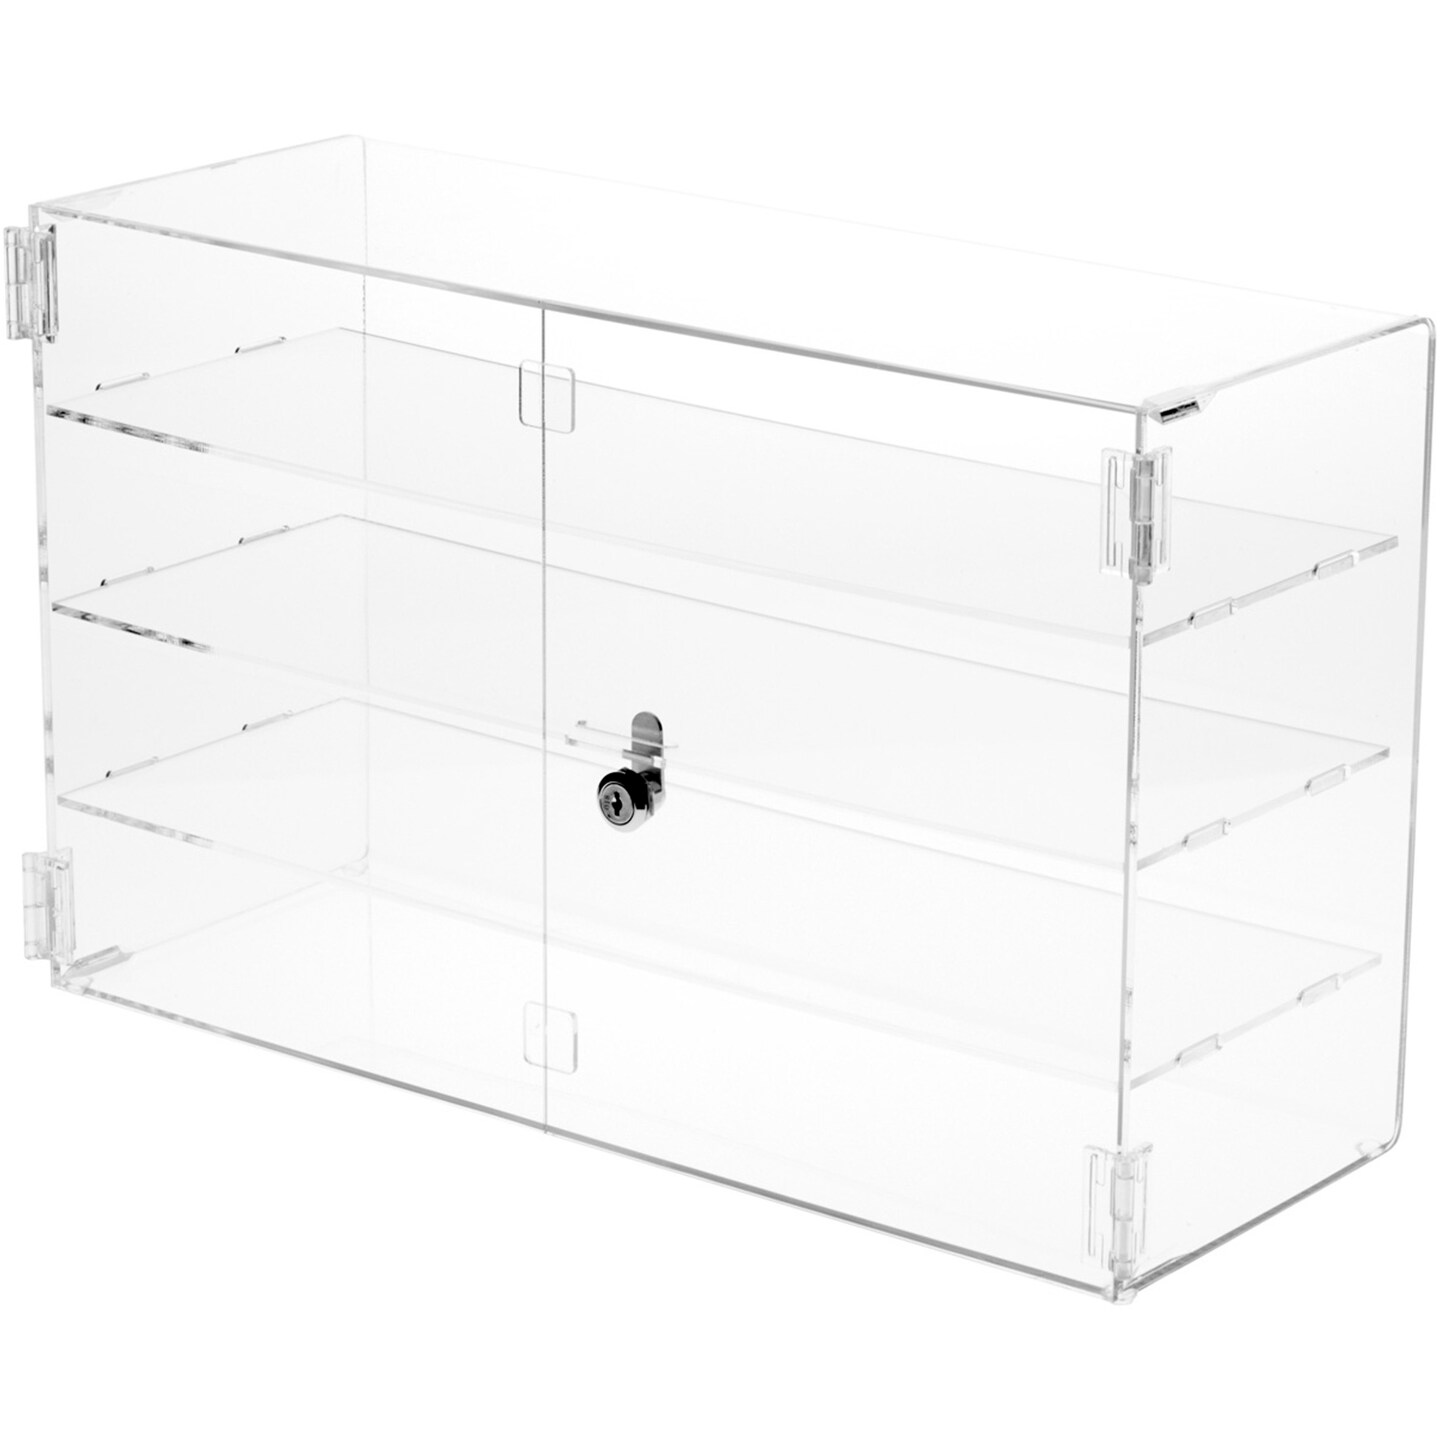 Plymor Clear Acrylic Rectangular Locking Display Case, 3 Shelves